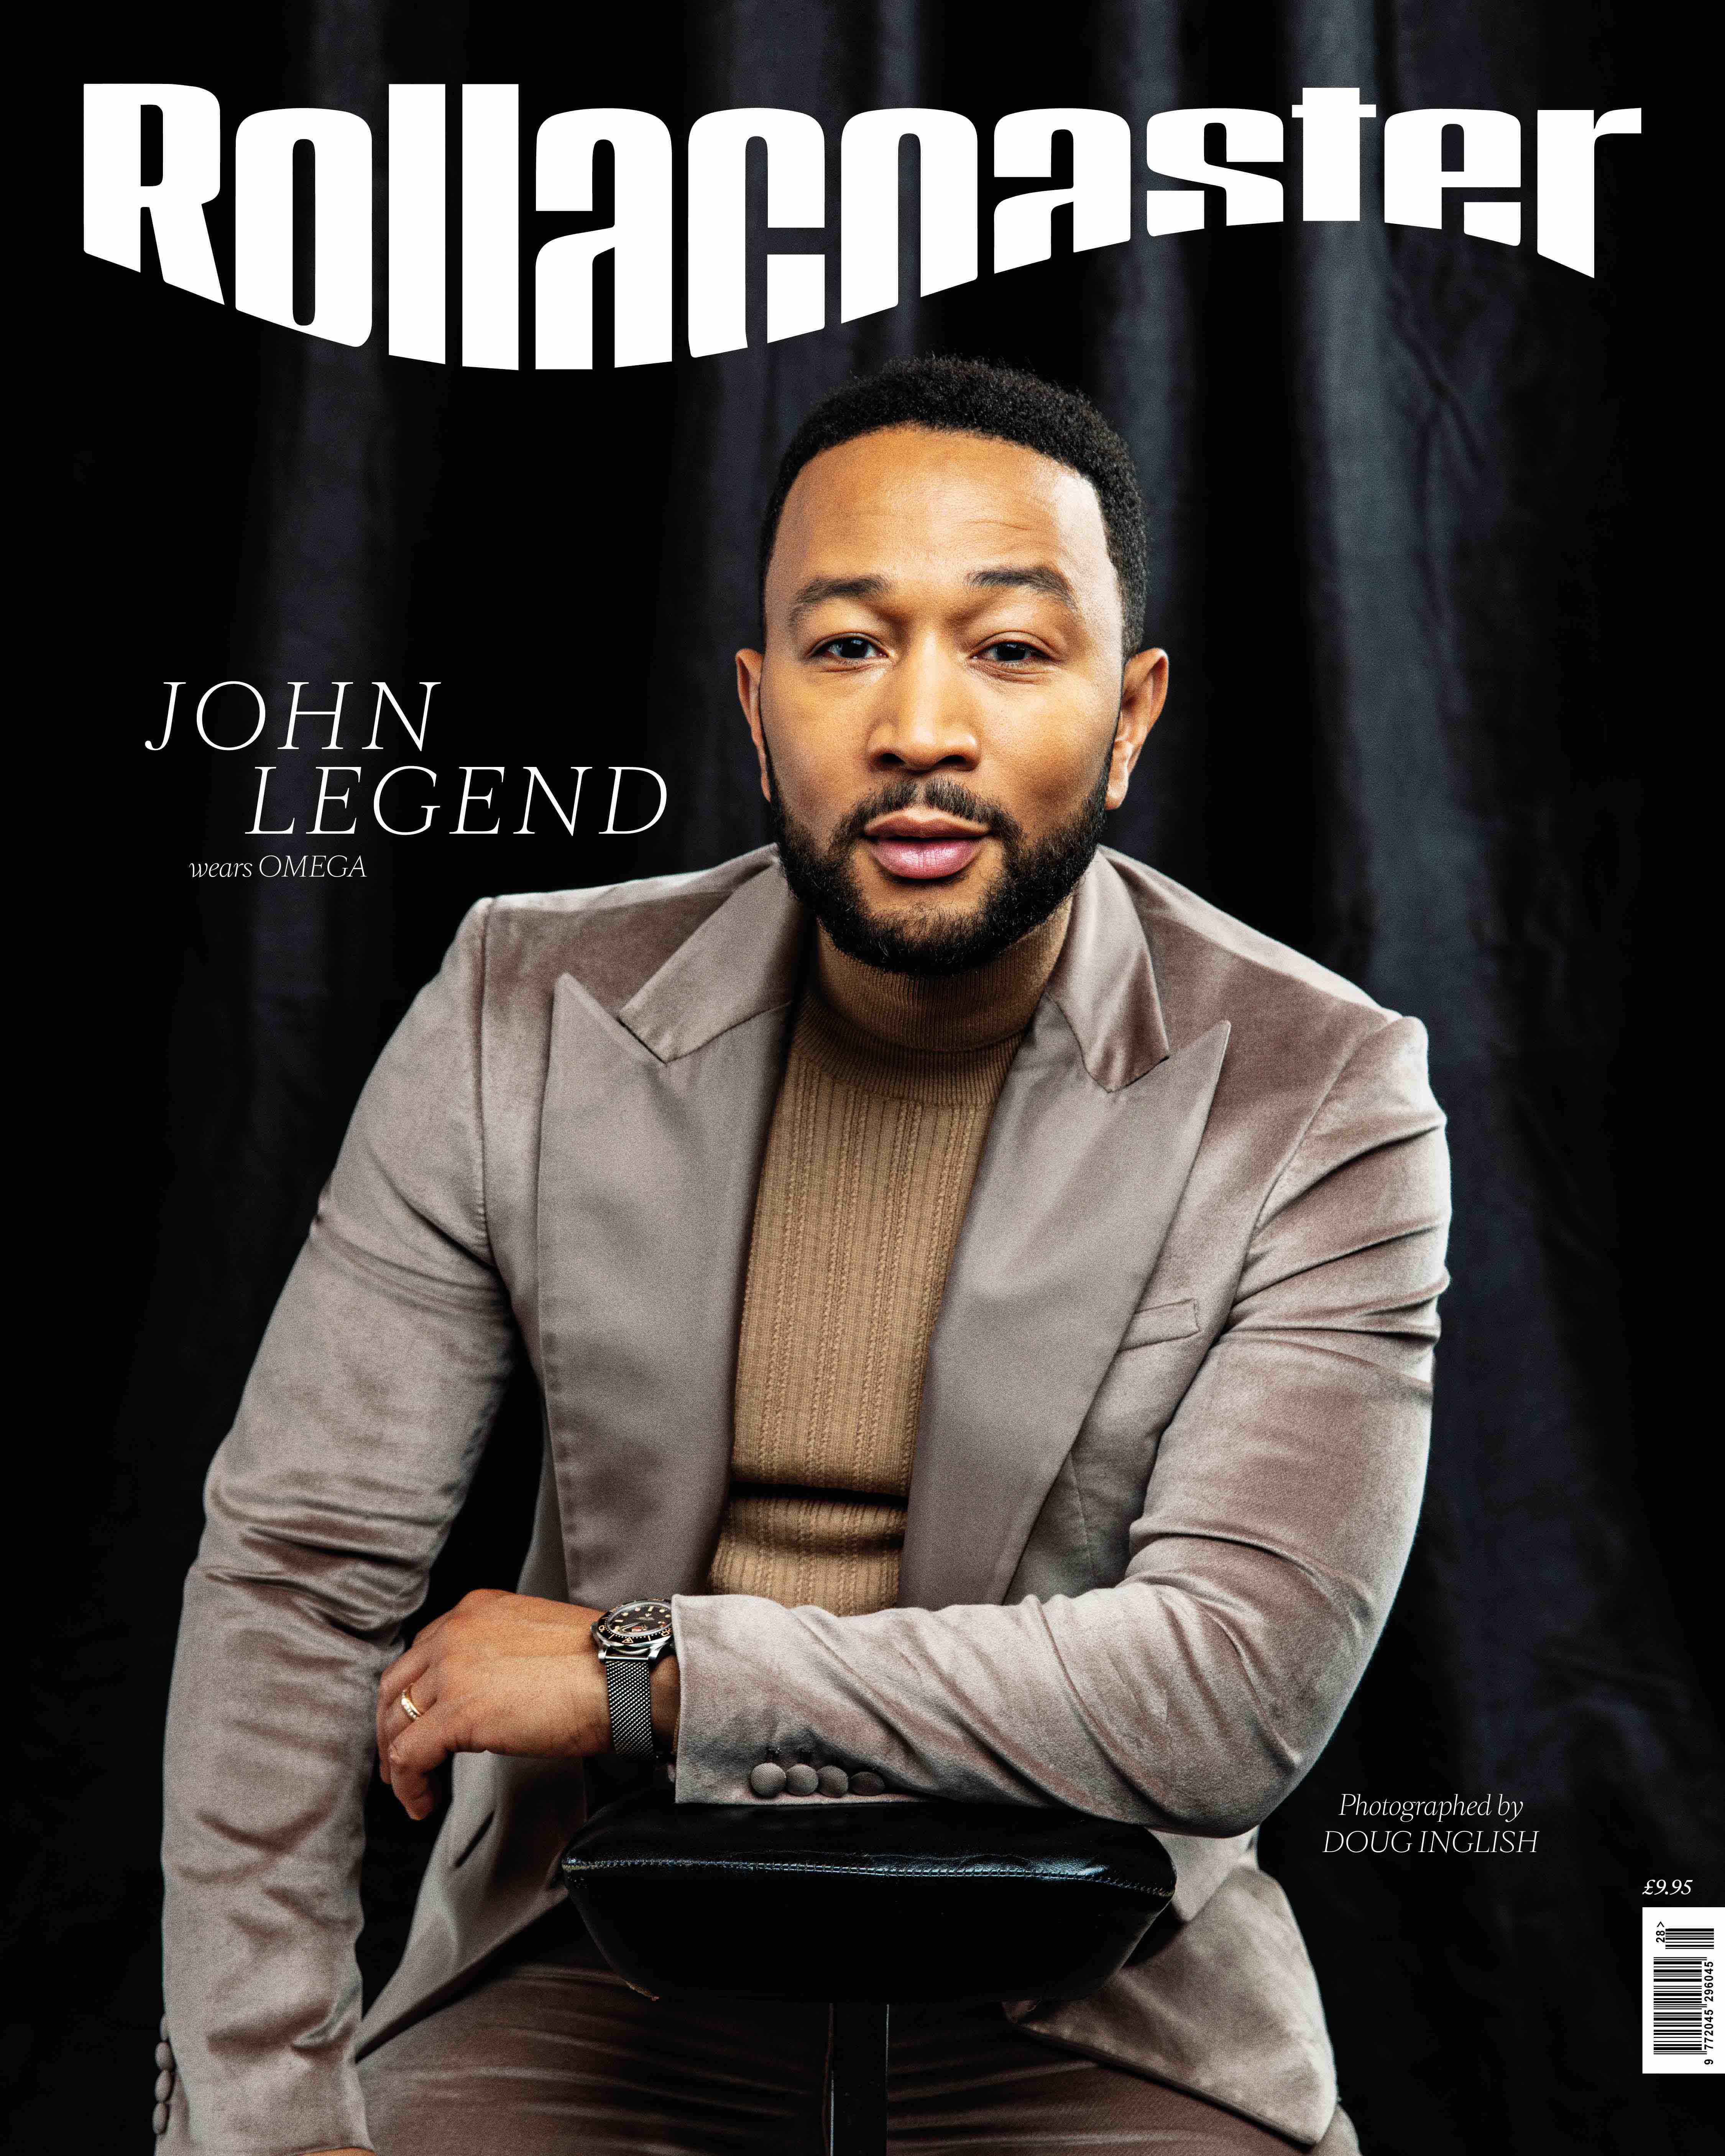 John Legend Covers Rollercoaster / Talks "Sexy & Soulful" New Album